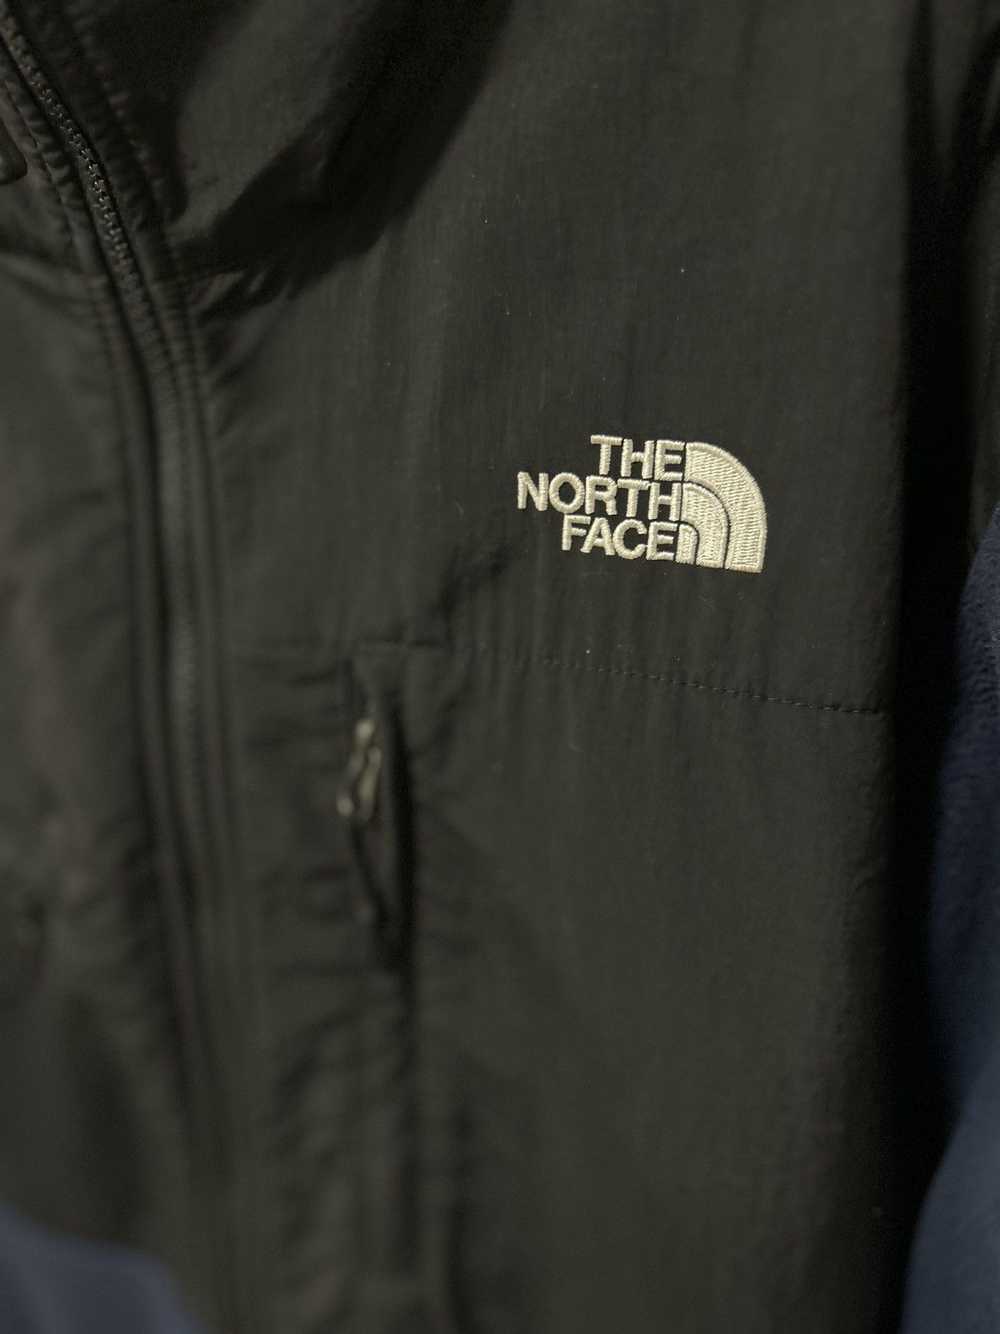 The North Face northface fleece jacket - image 2